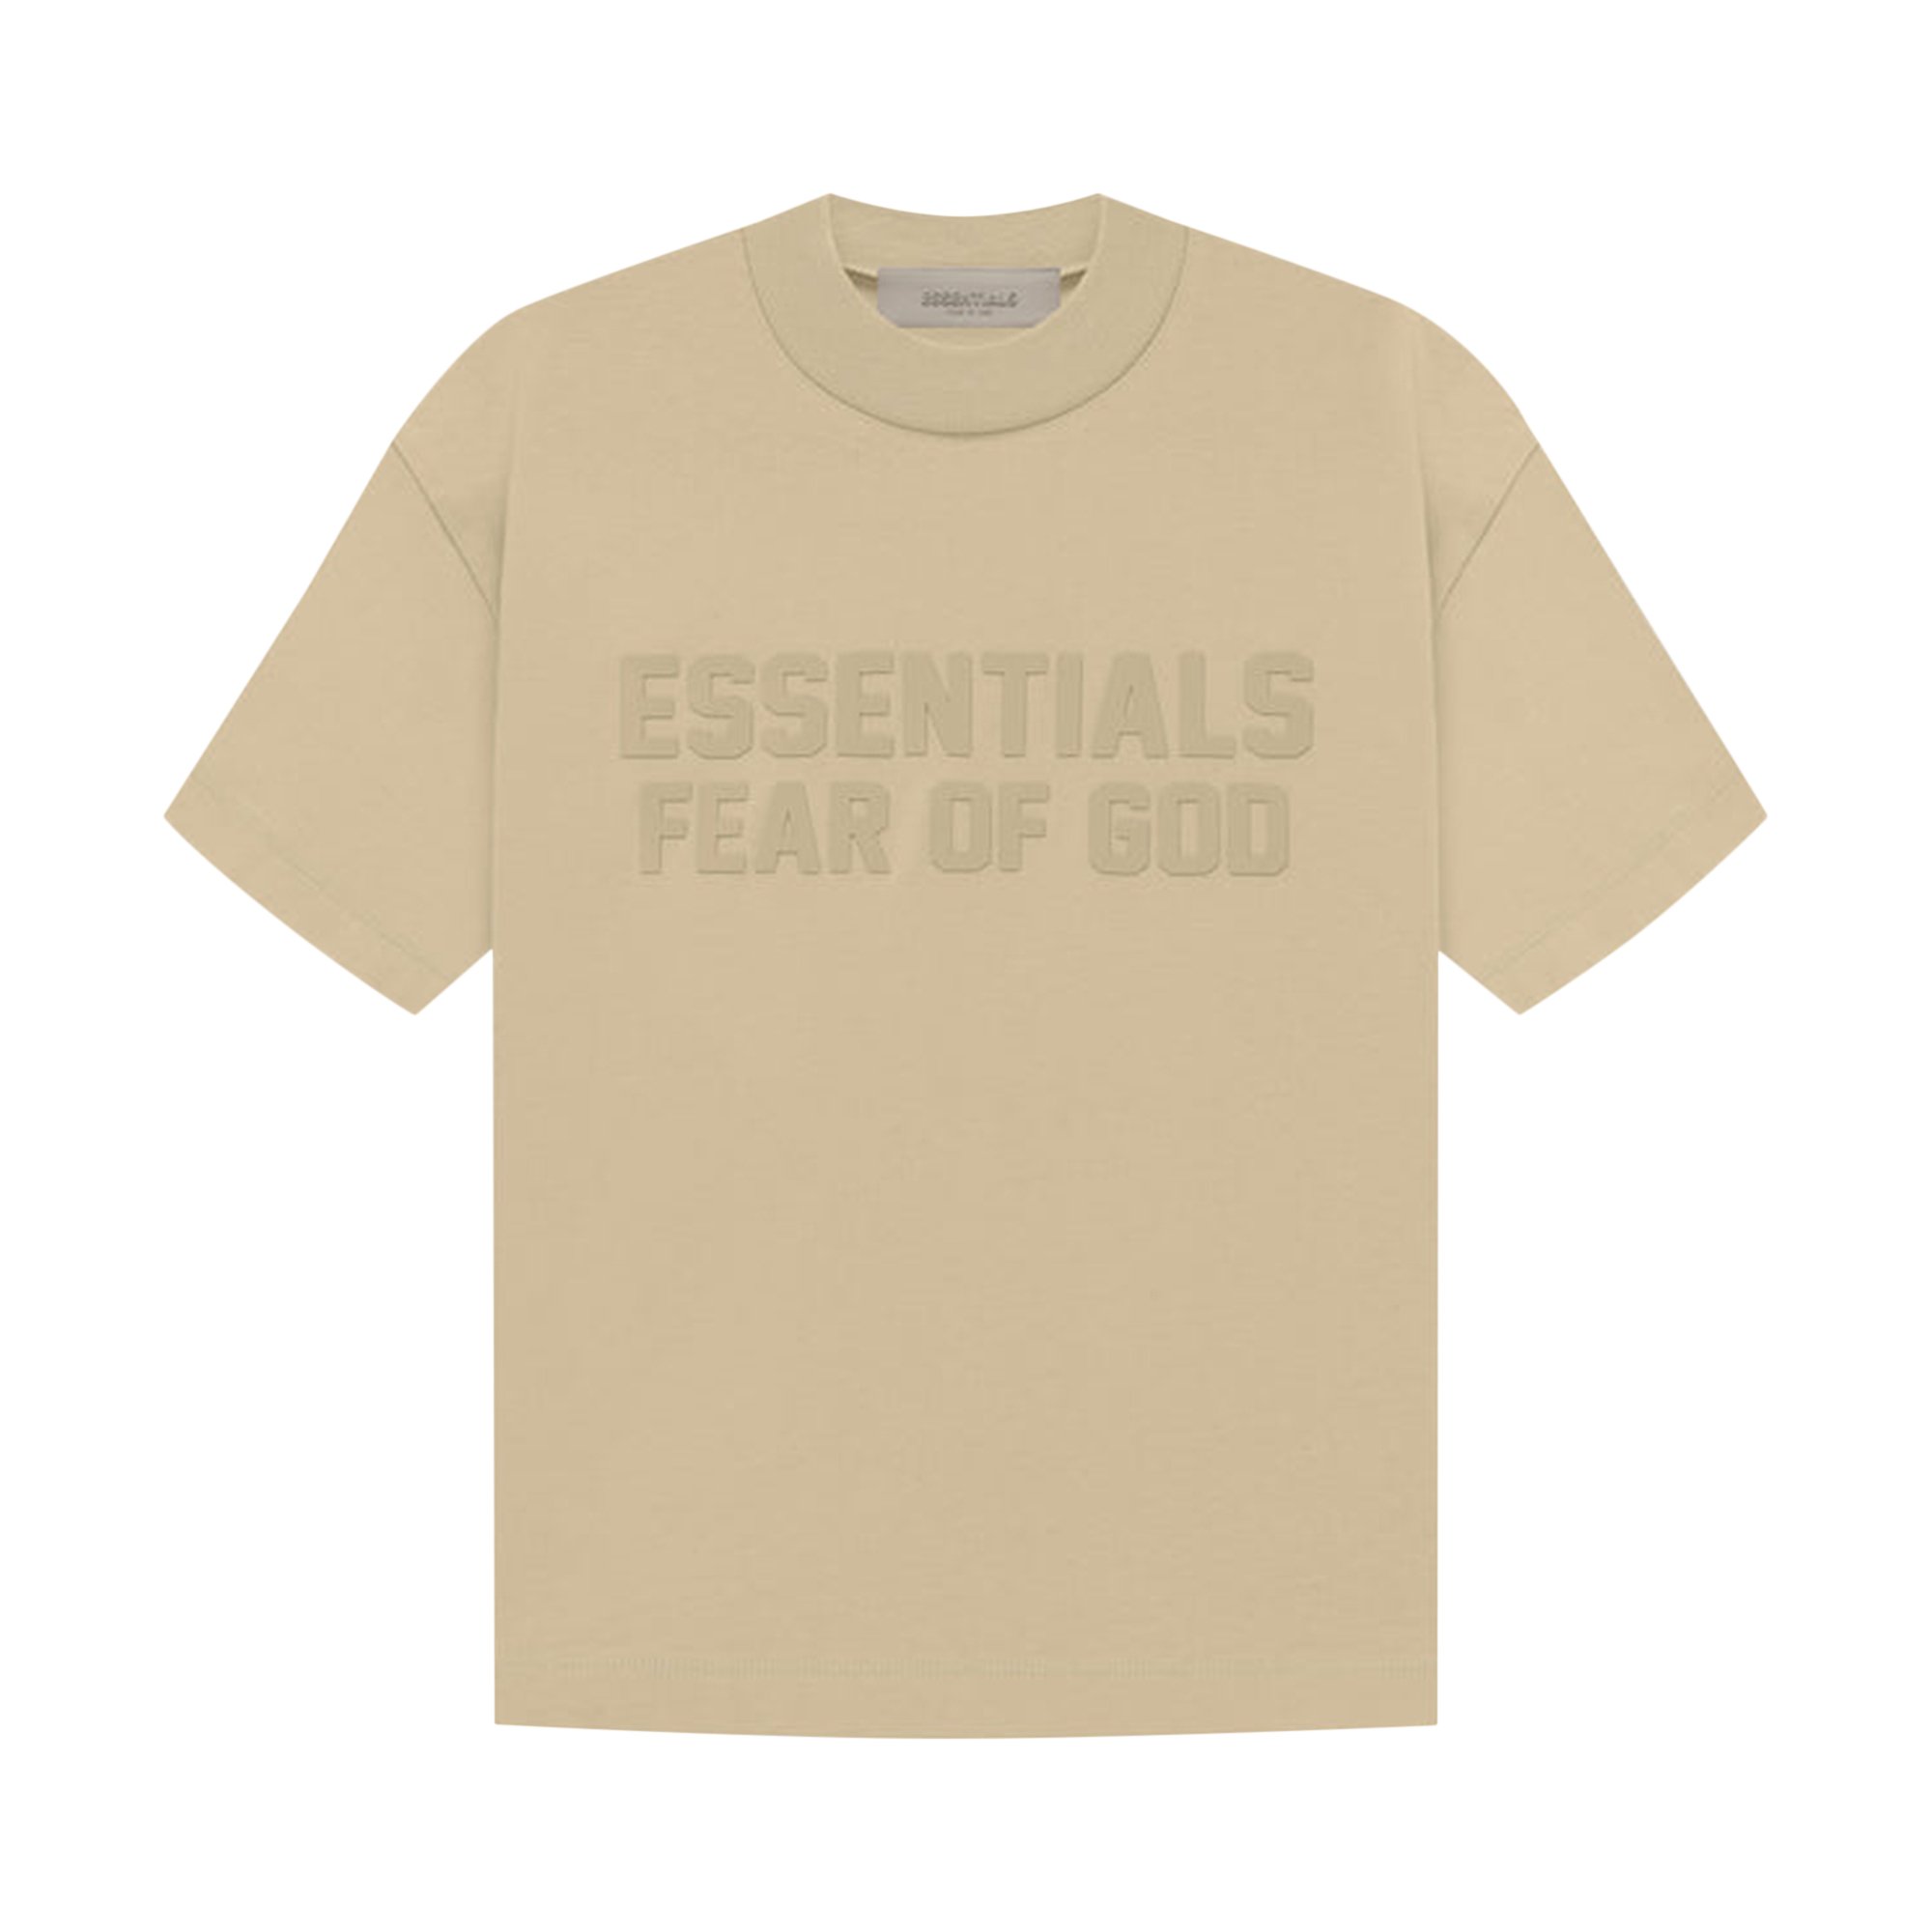 Детская футболка с короткими рукавами Fear of God Essentials, цвет Песок футболка с короткими рукавами fear of god essentials цвет песок